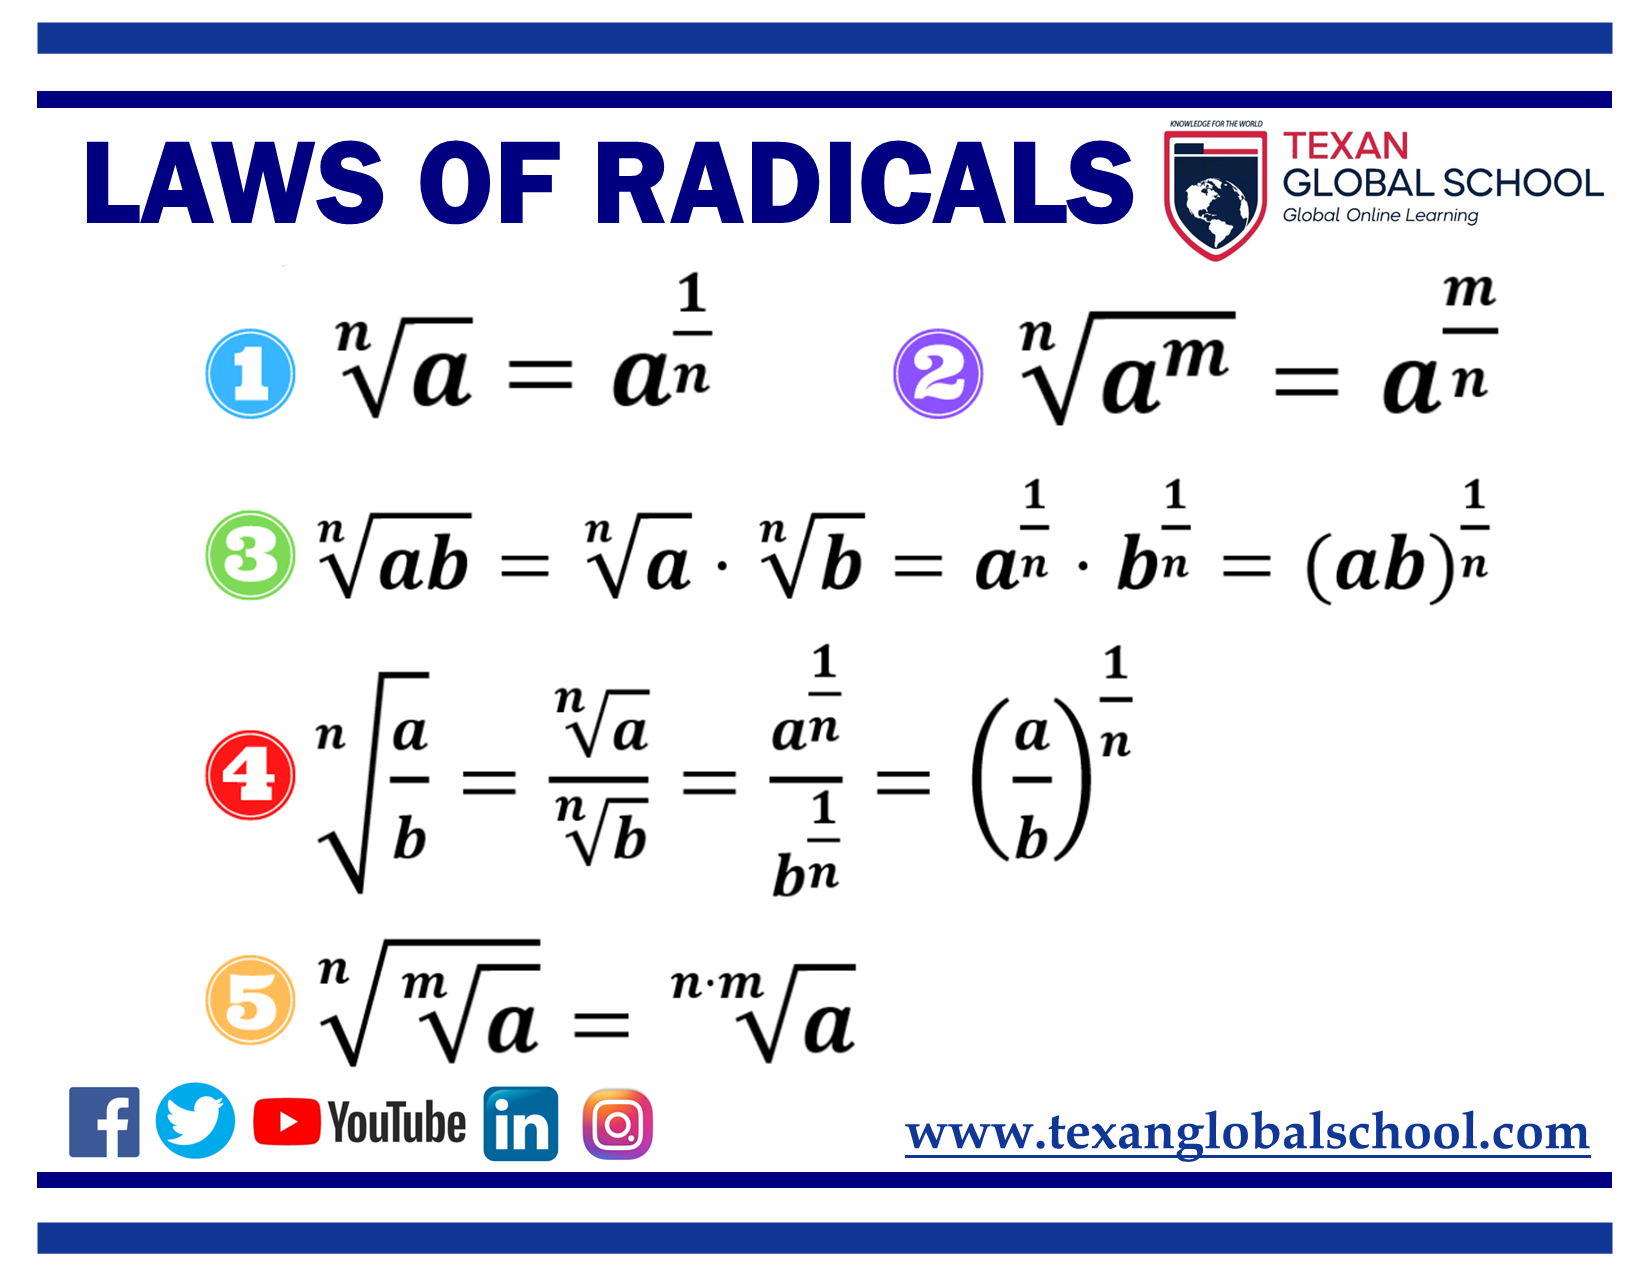 TGS-Laws_Radicals